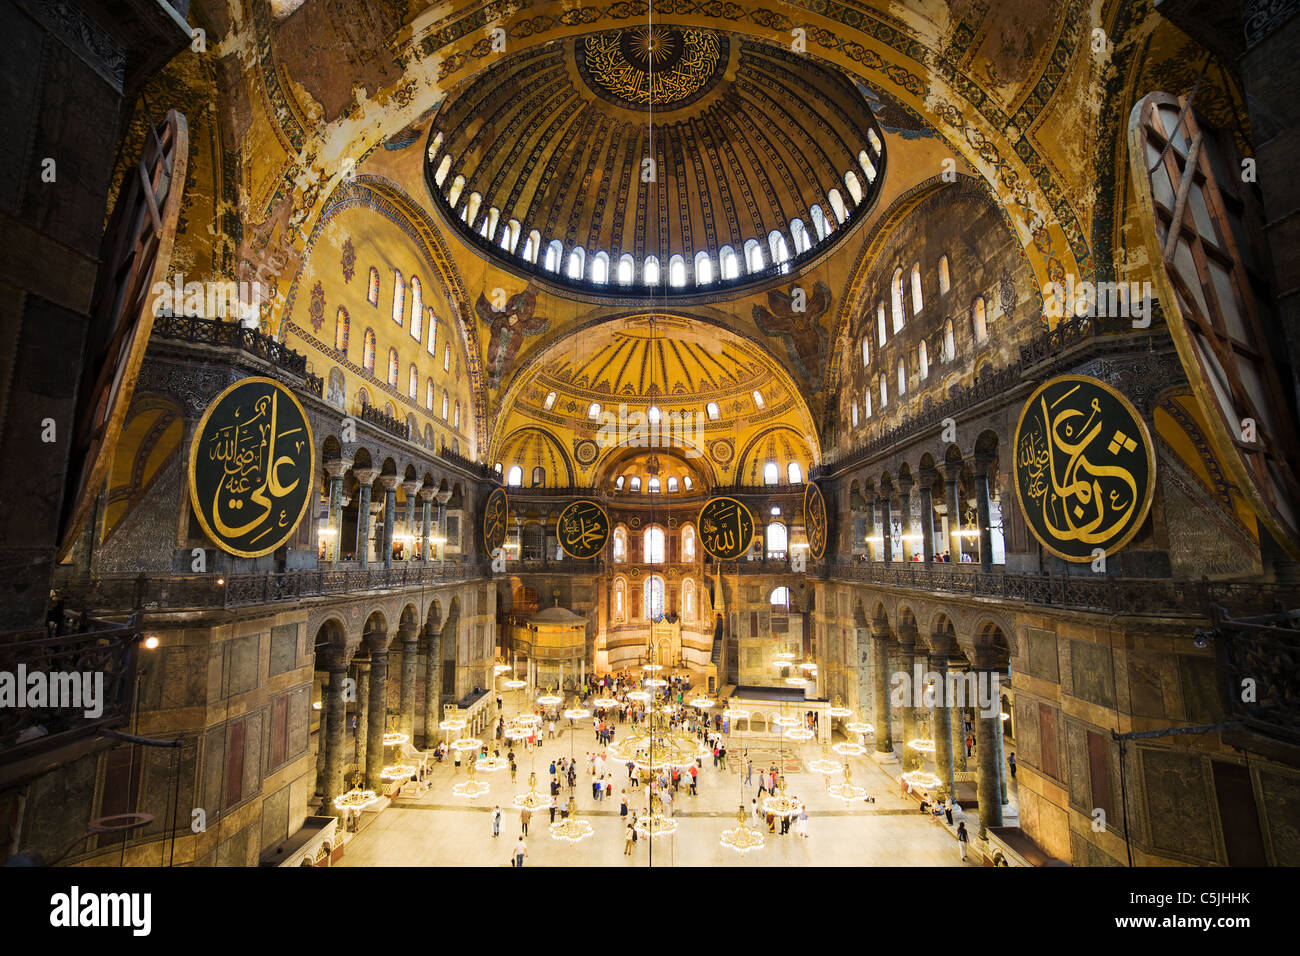 The Hagia Sophia interior, famous Byzantine landmark in Istanbul, Turkey Stock Photo